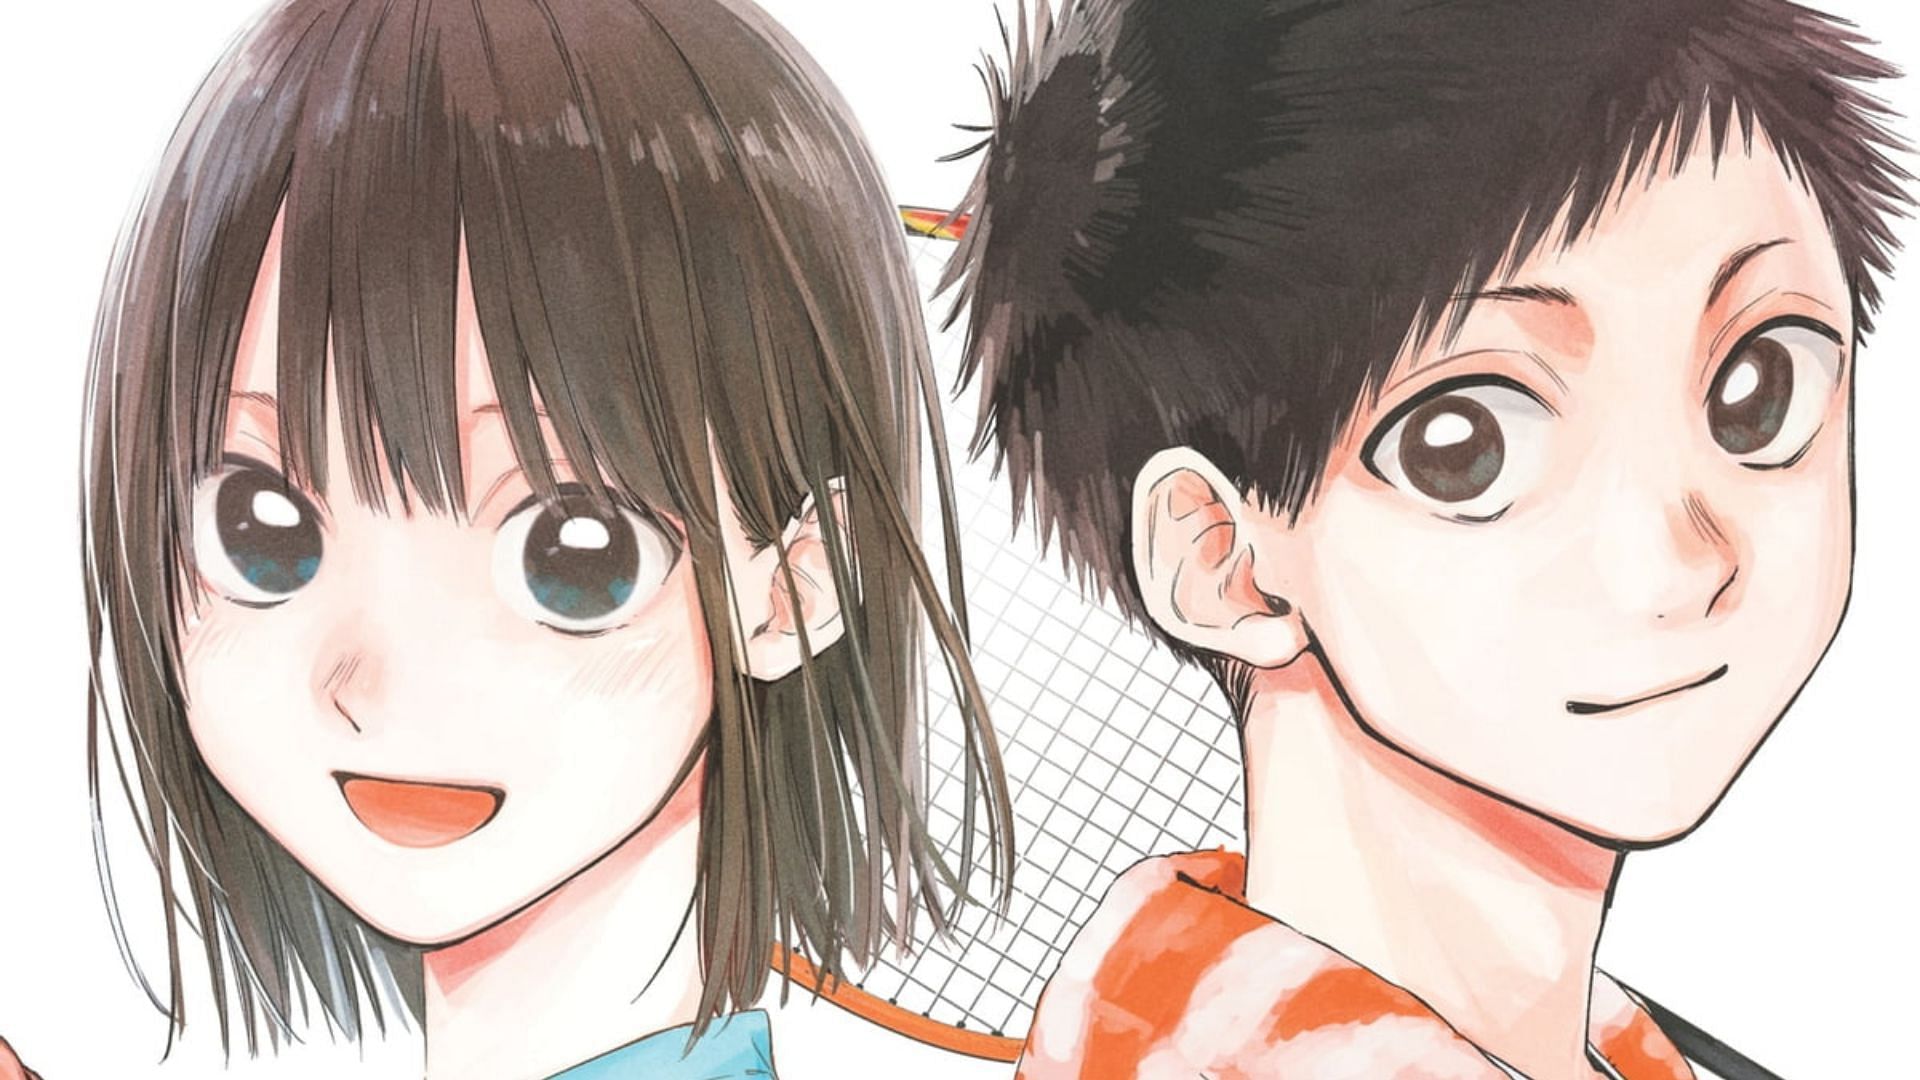 Chinatsu Kano and Taiki Inomata as seen in the manga (Image via Shueisha)